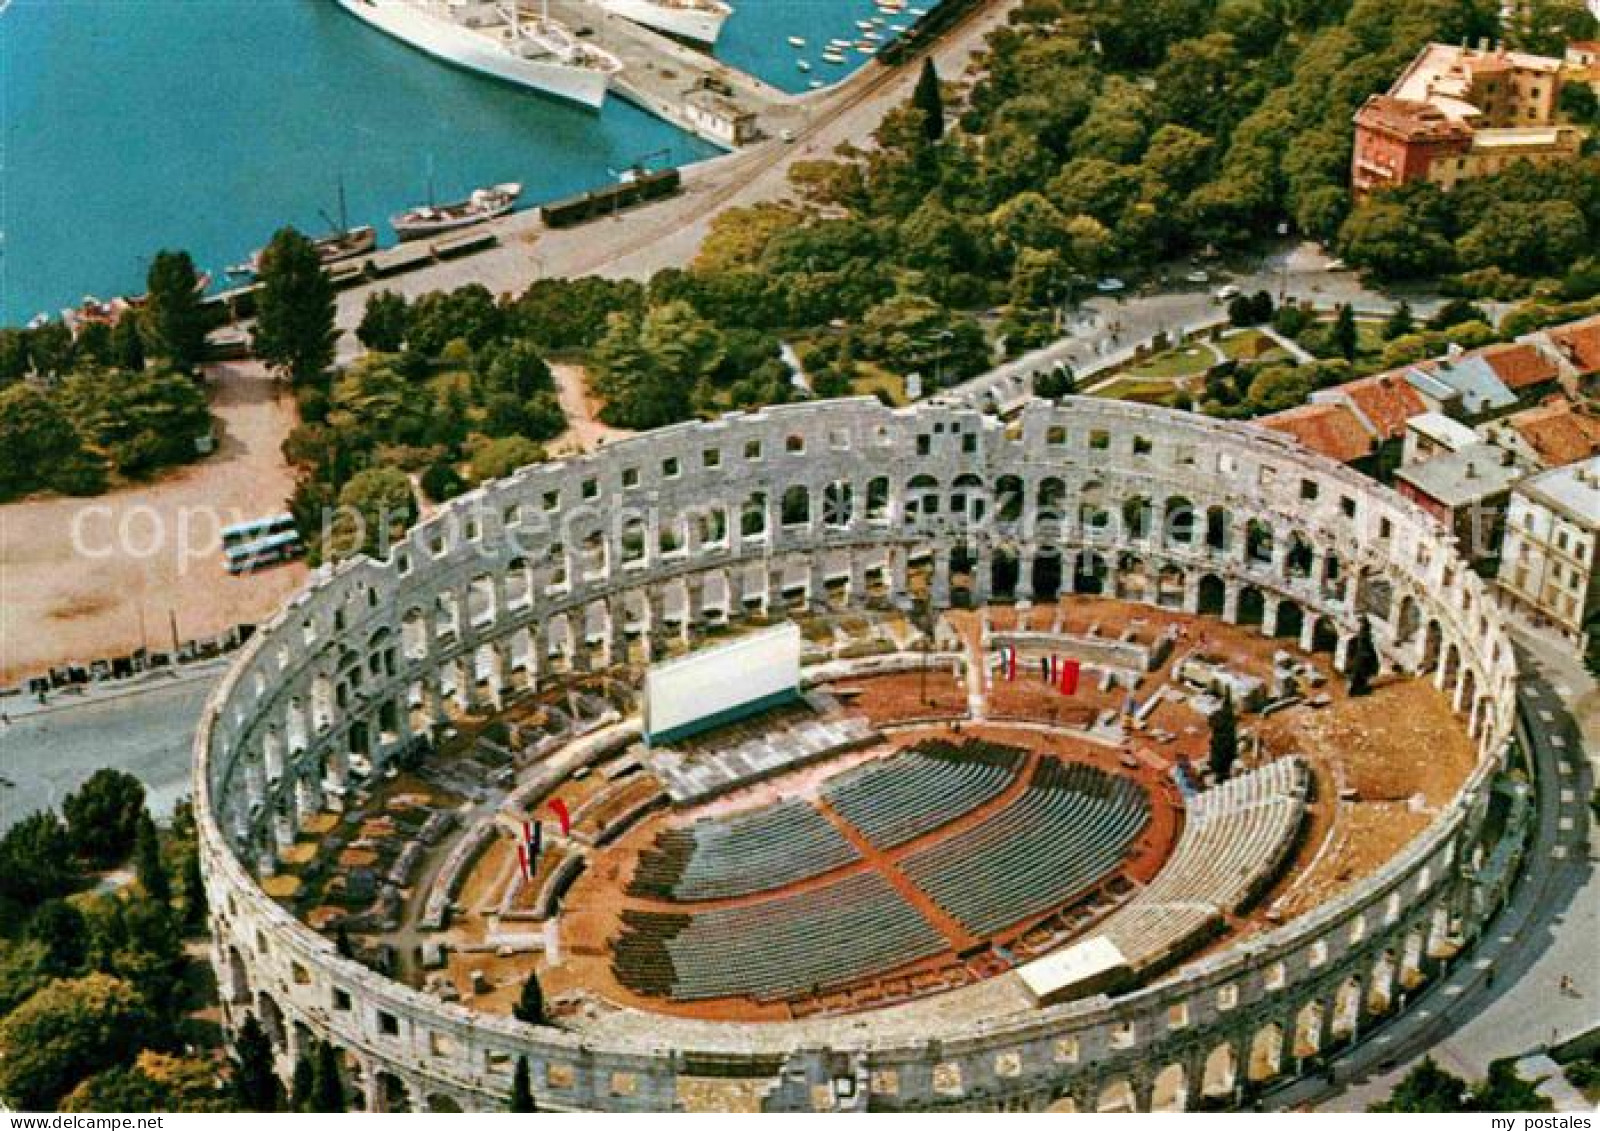 72757335 Pola Pula Croatia Amphitheater   - Kroatien